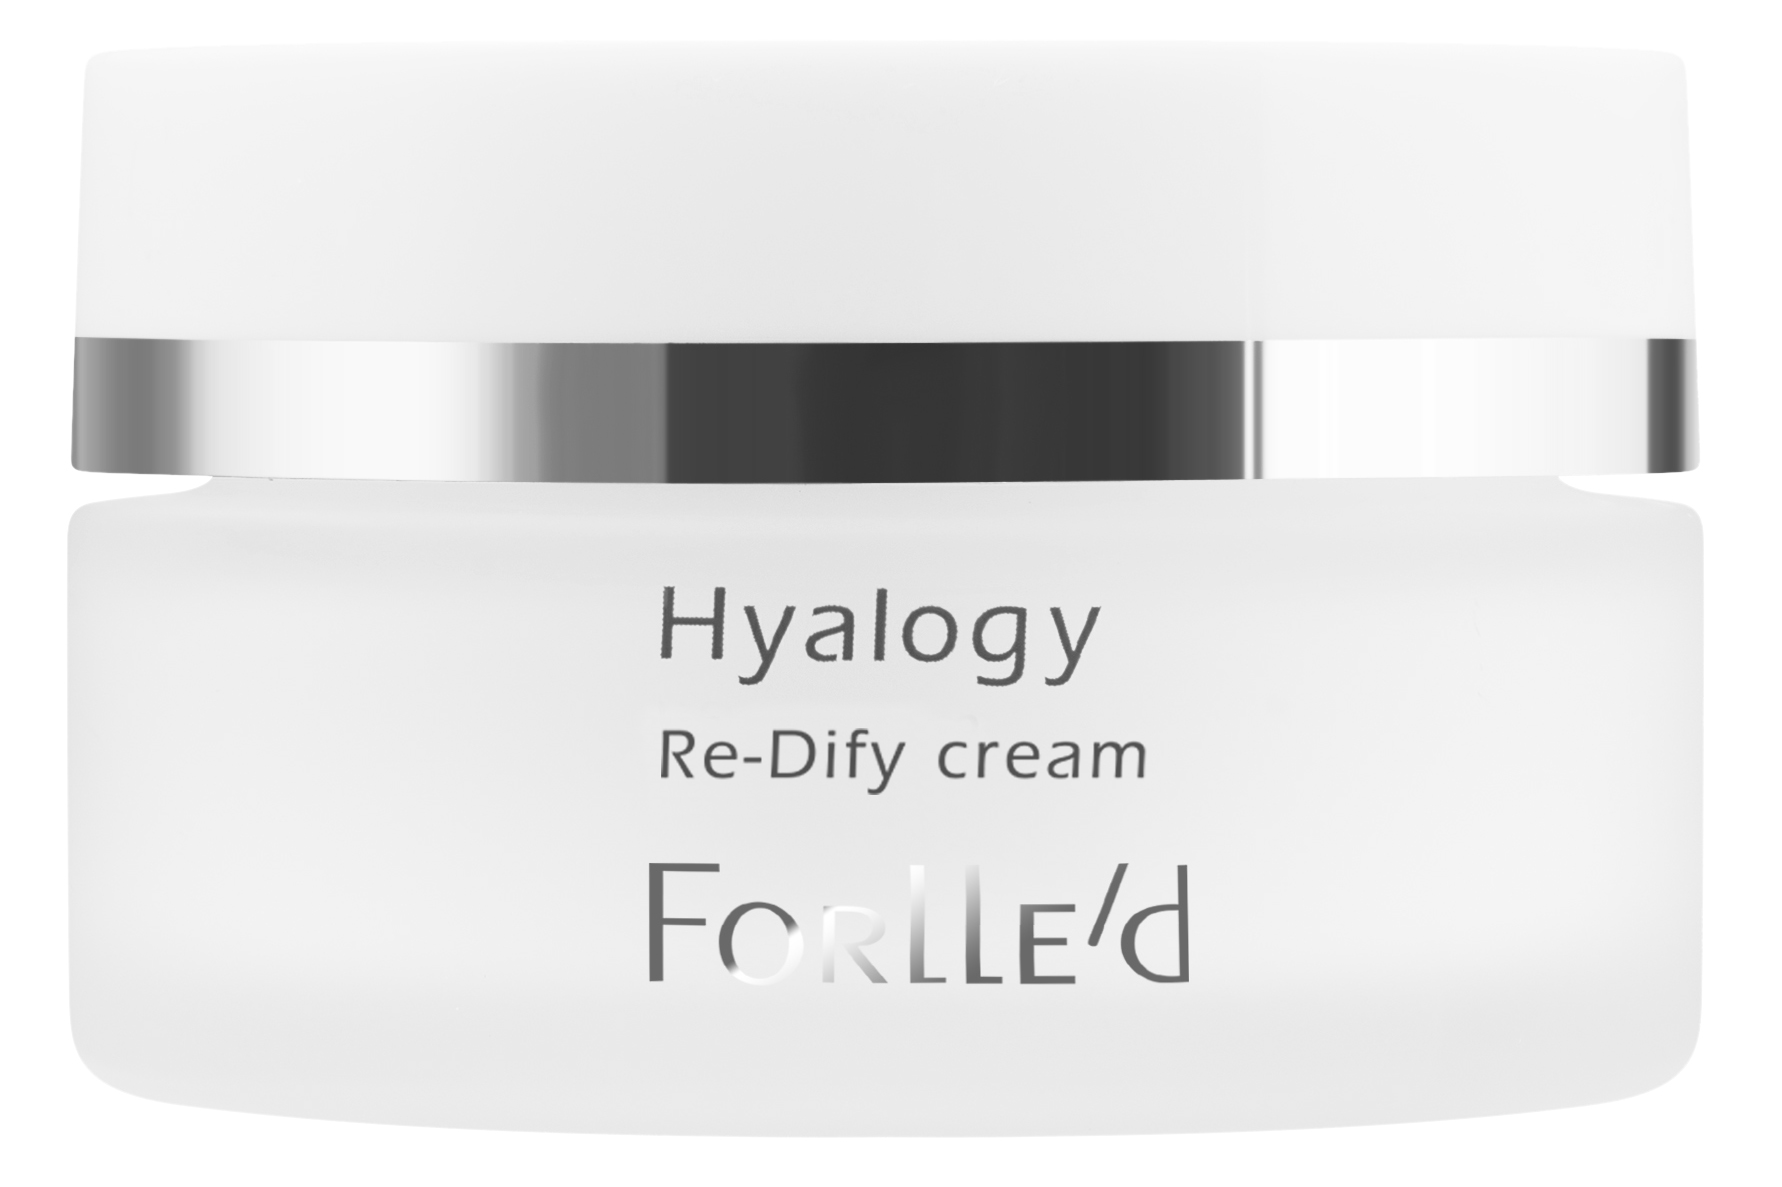 Forlle'd Hyalogy Re-Dify cream (50ml)